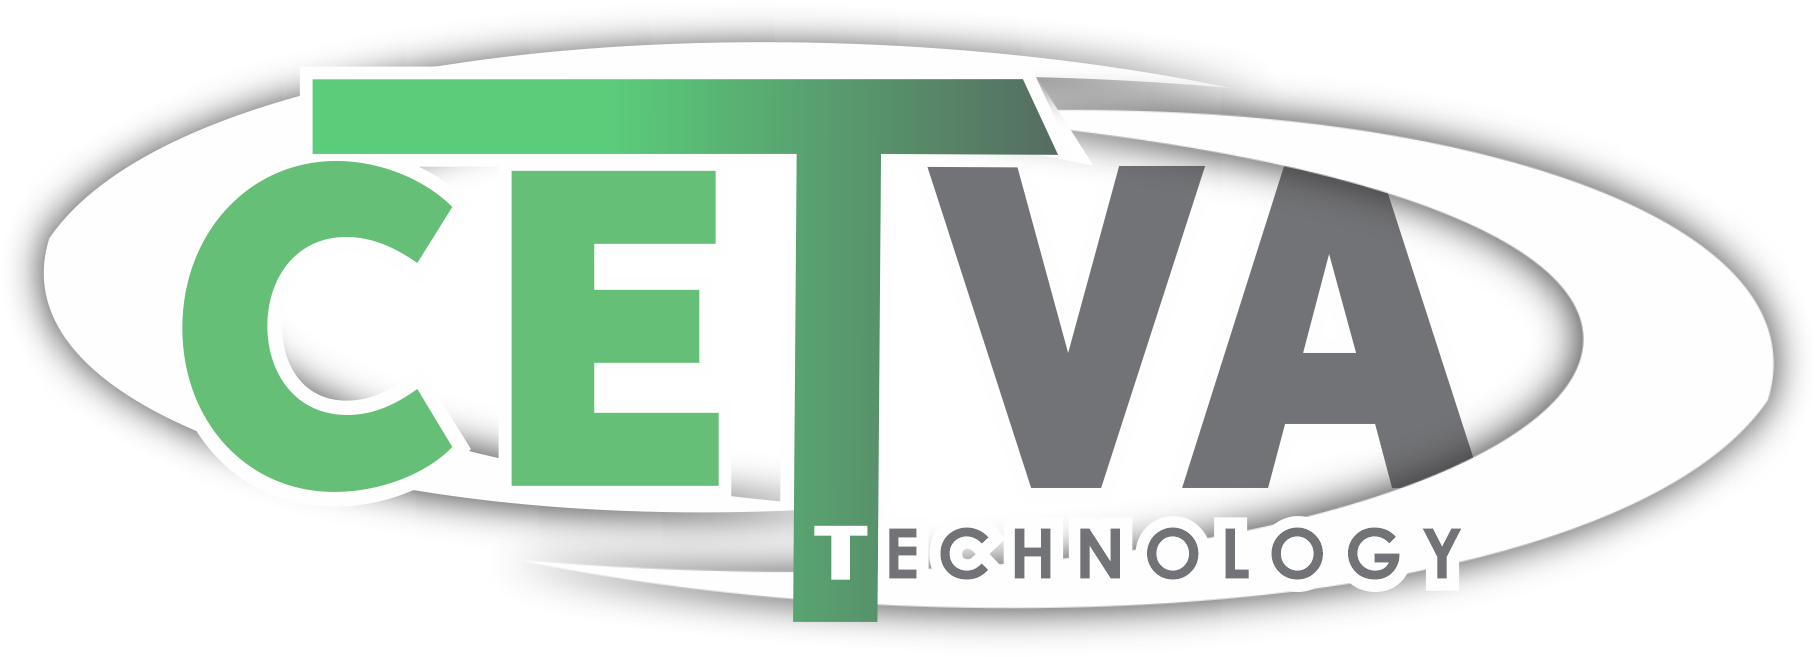 CETVA Technology